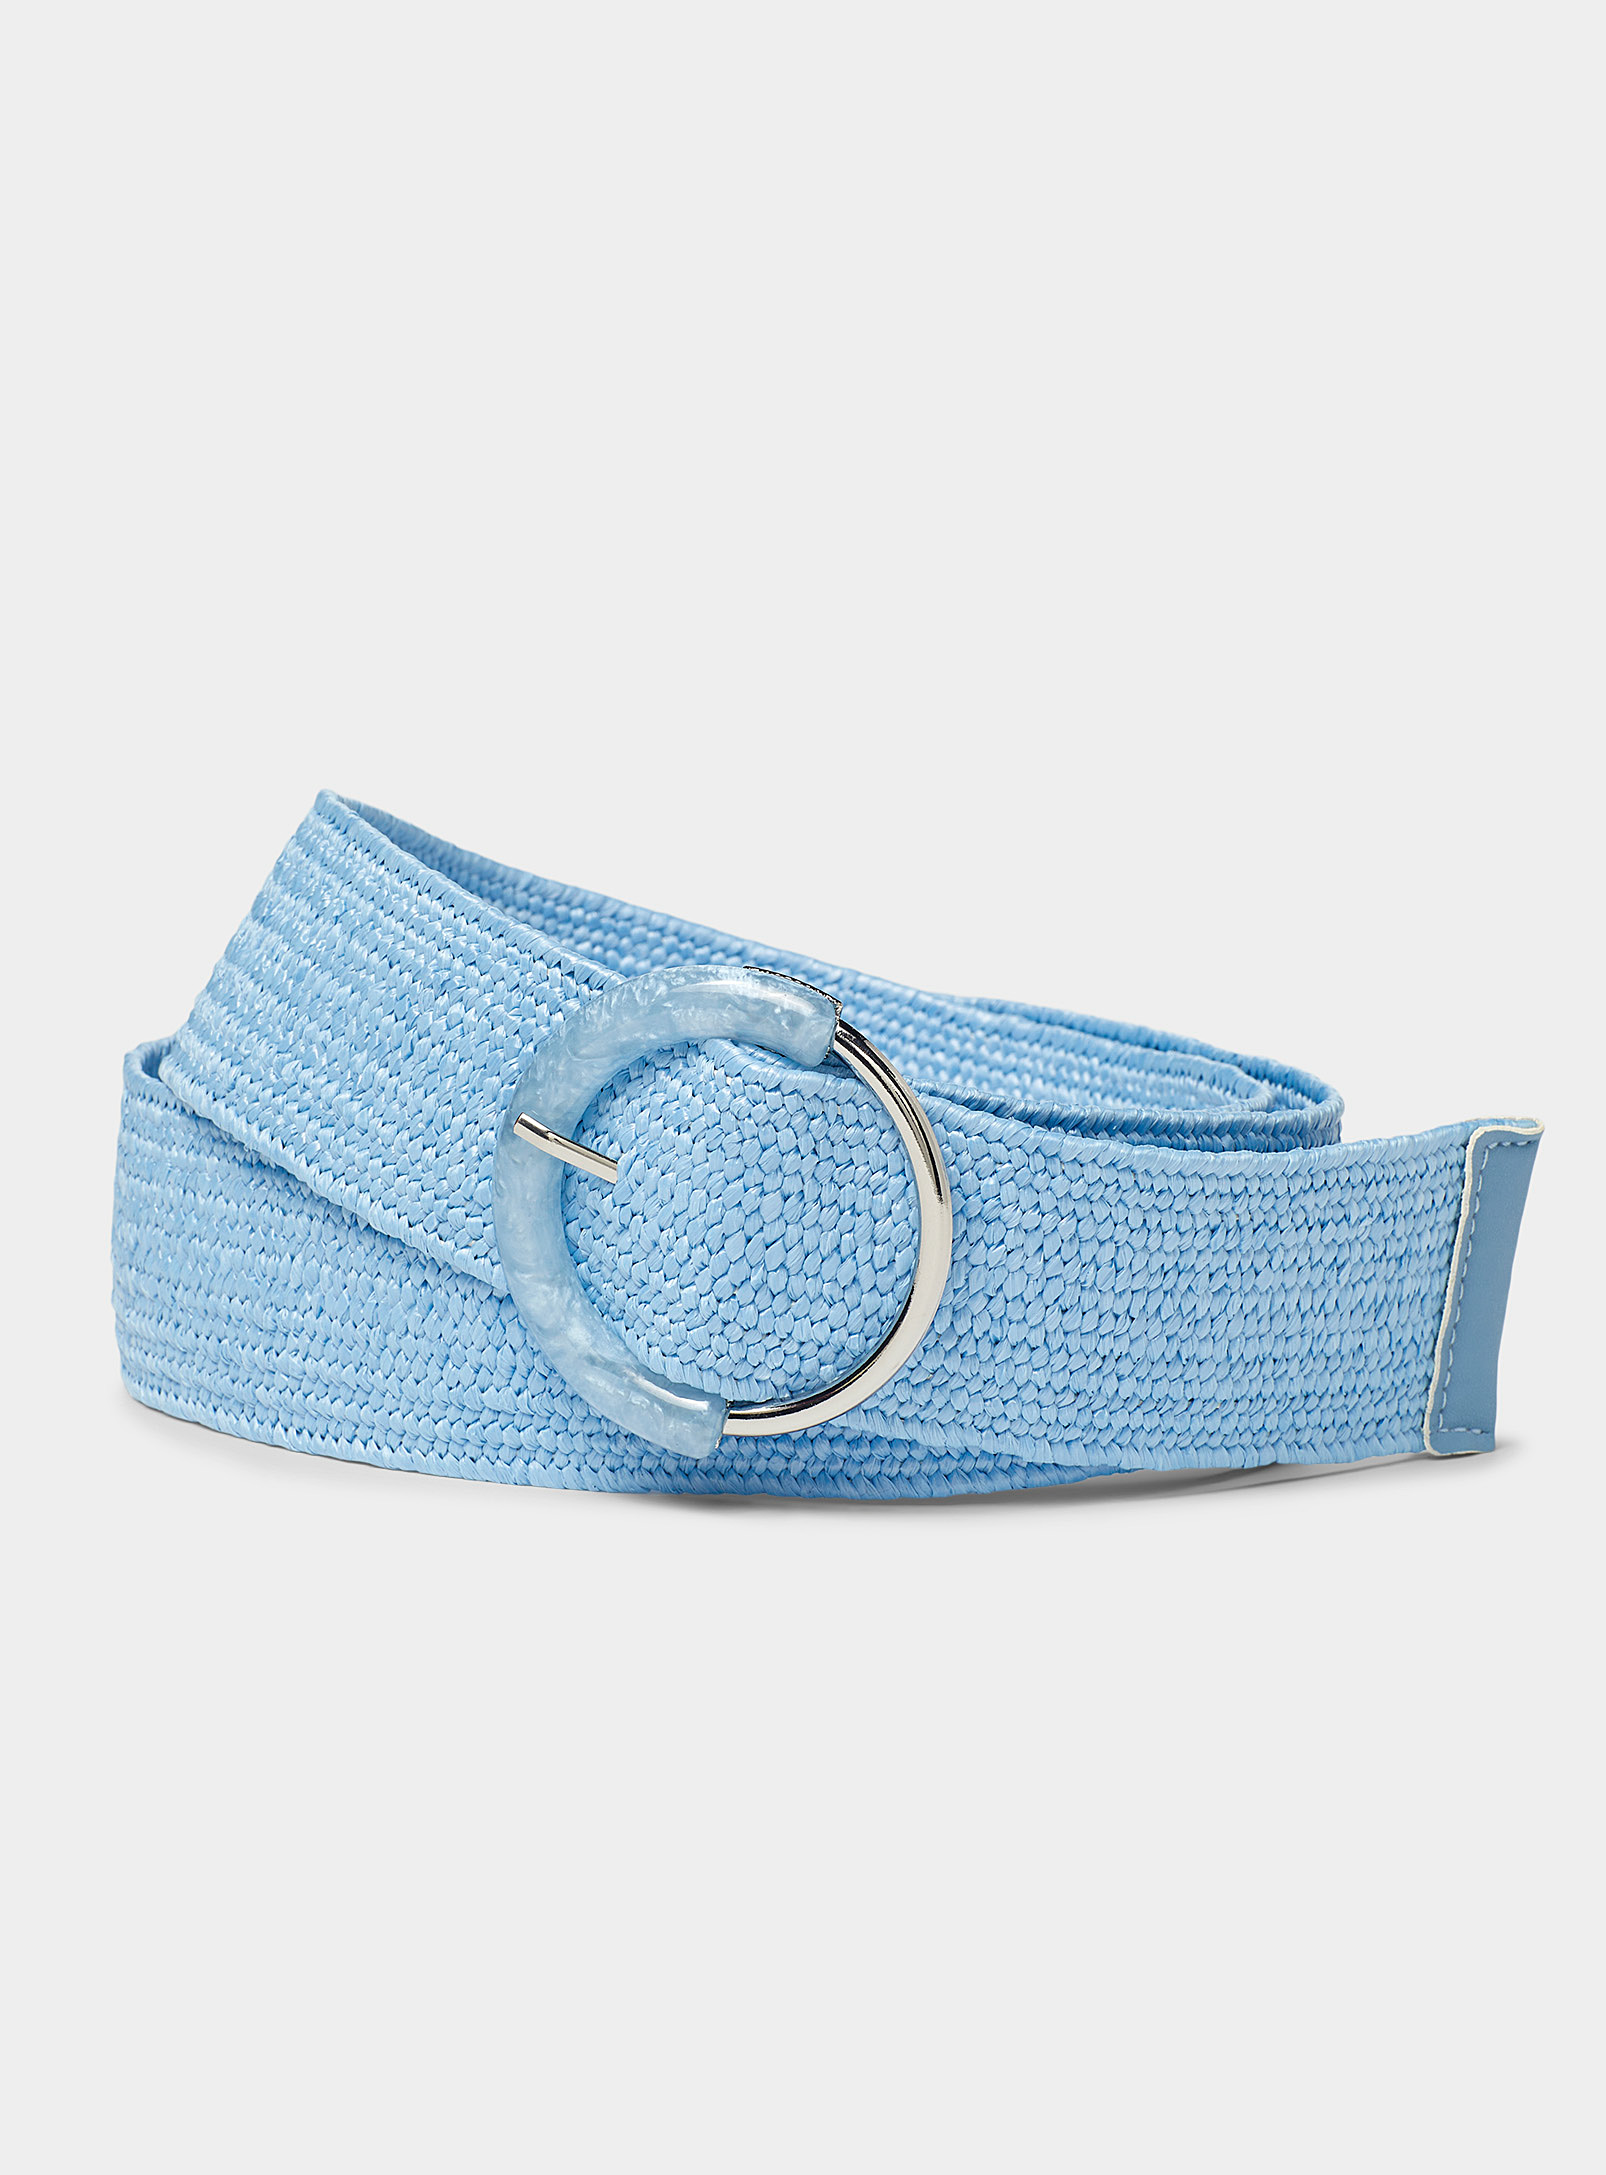 Simons - Women's Marble buckle wide braided belt